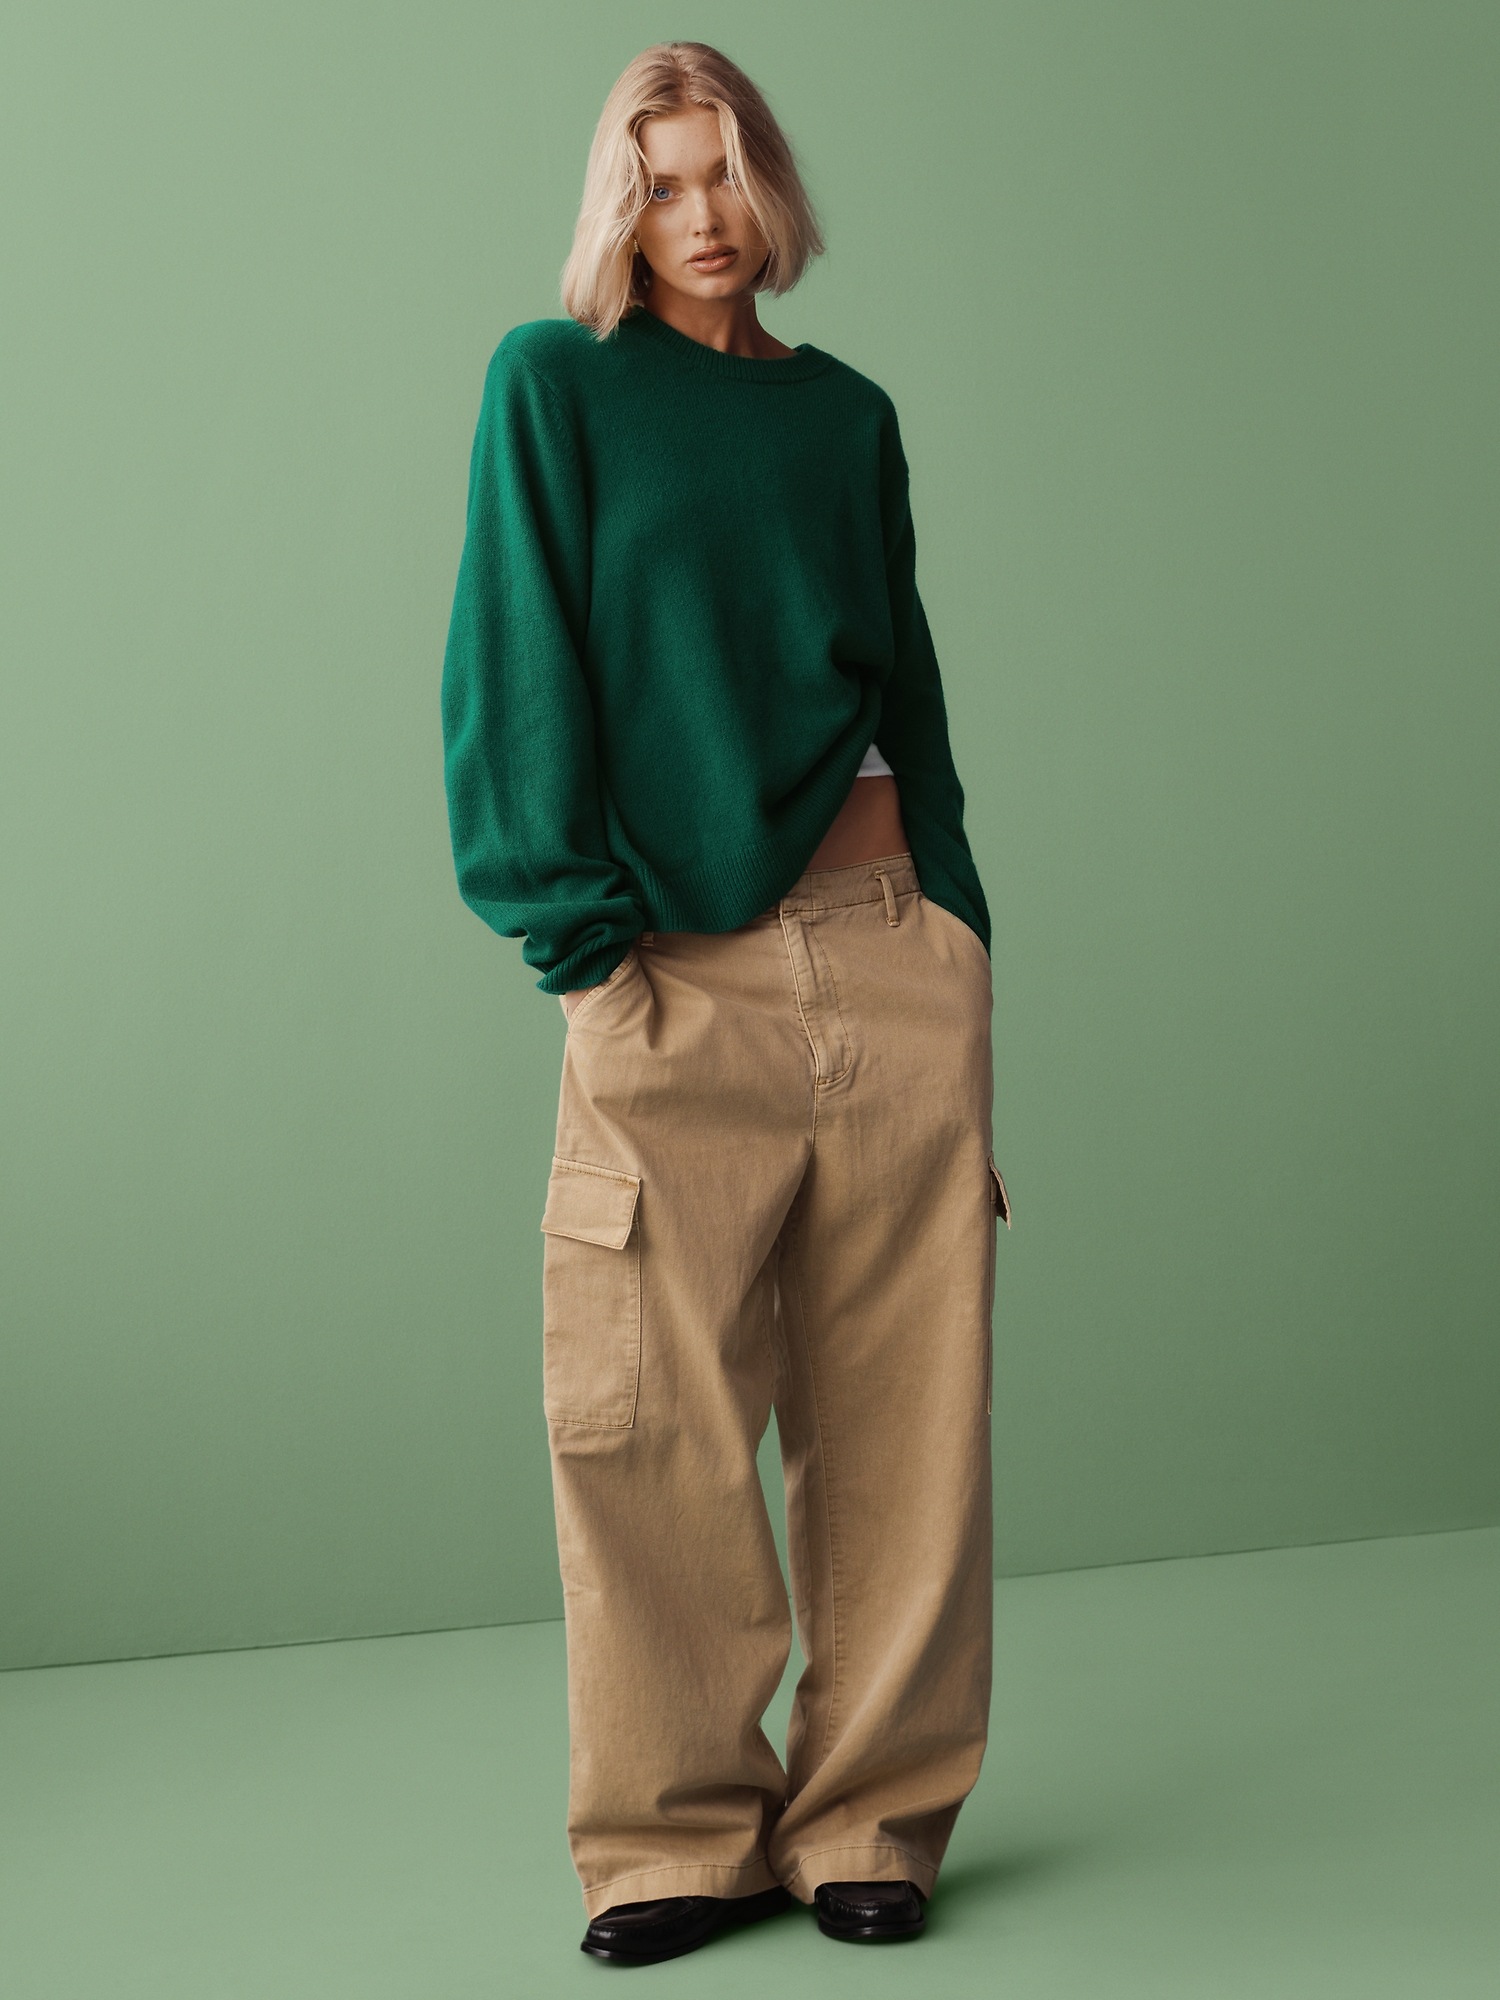 gap women's size 8 khakis vintage rolled crop solid green pants